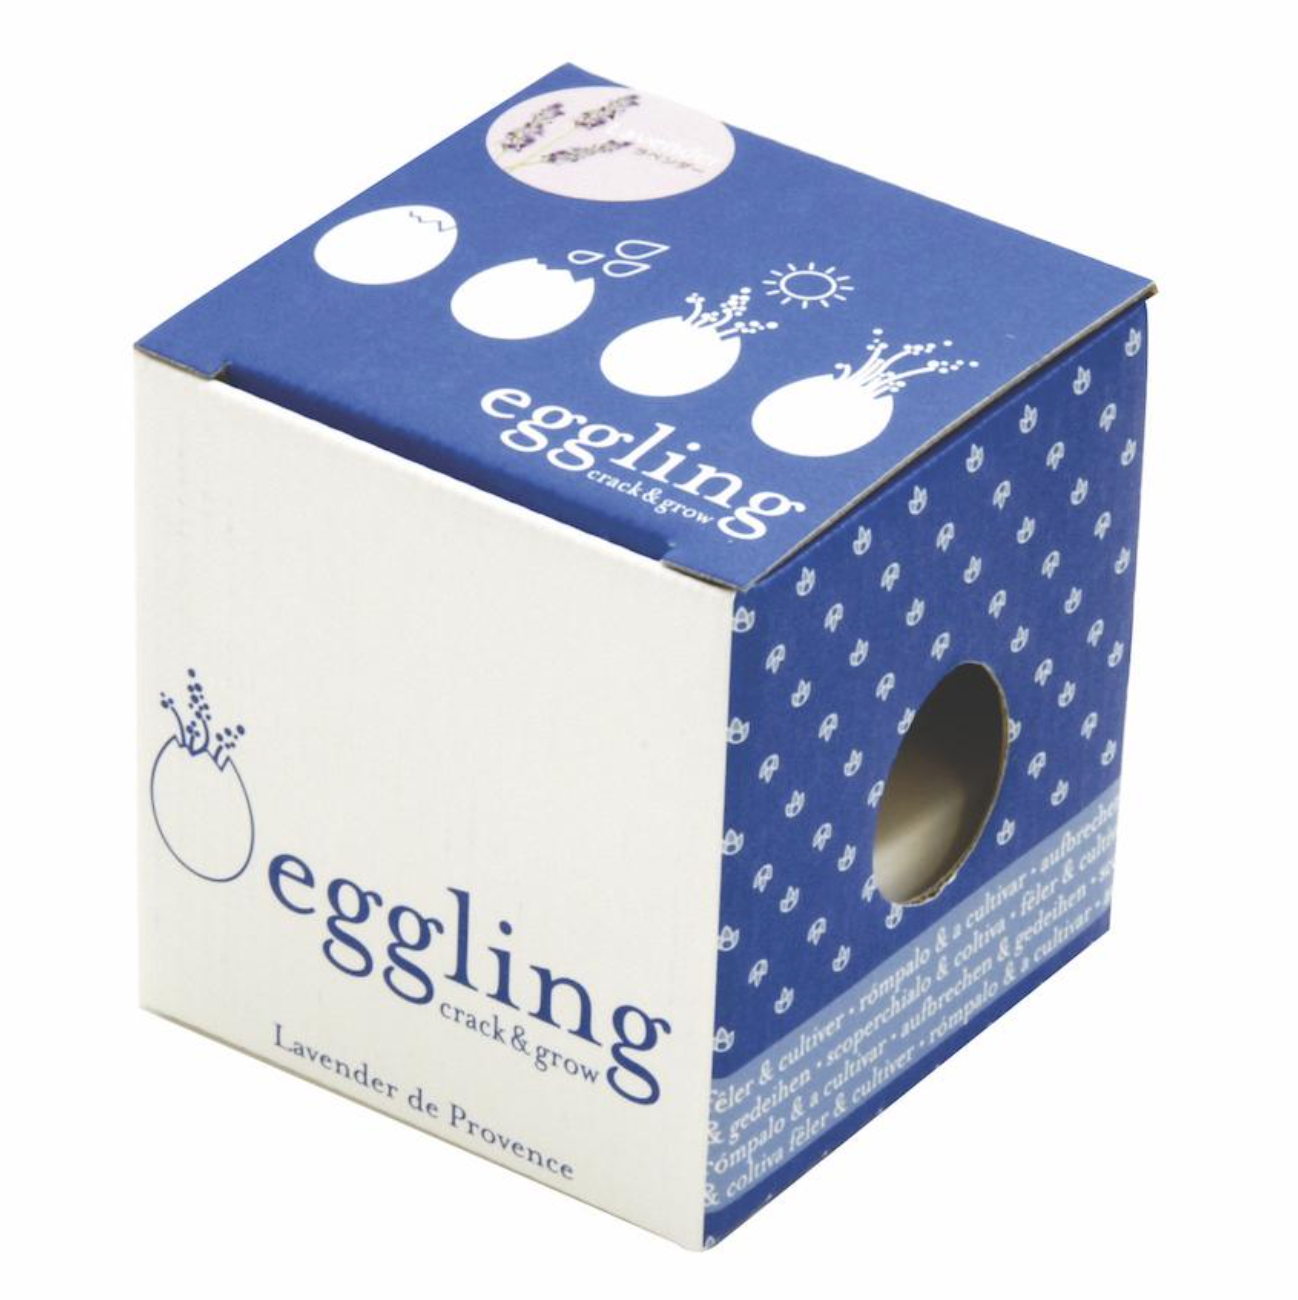 Eggling Crack & Grow - Lavender